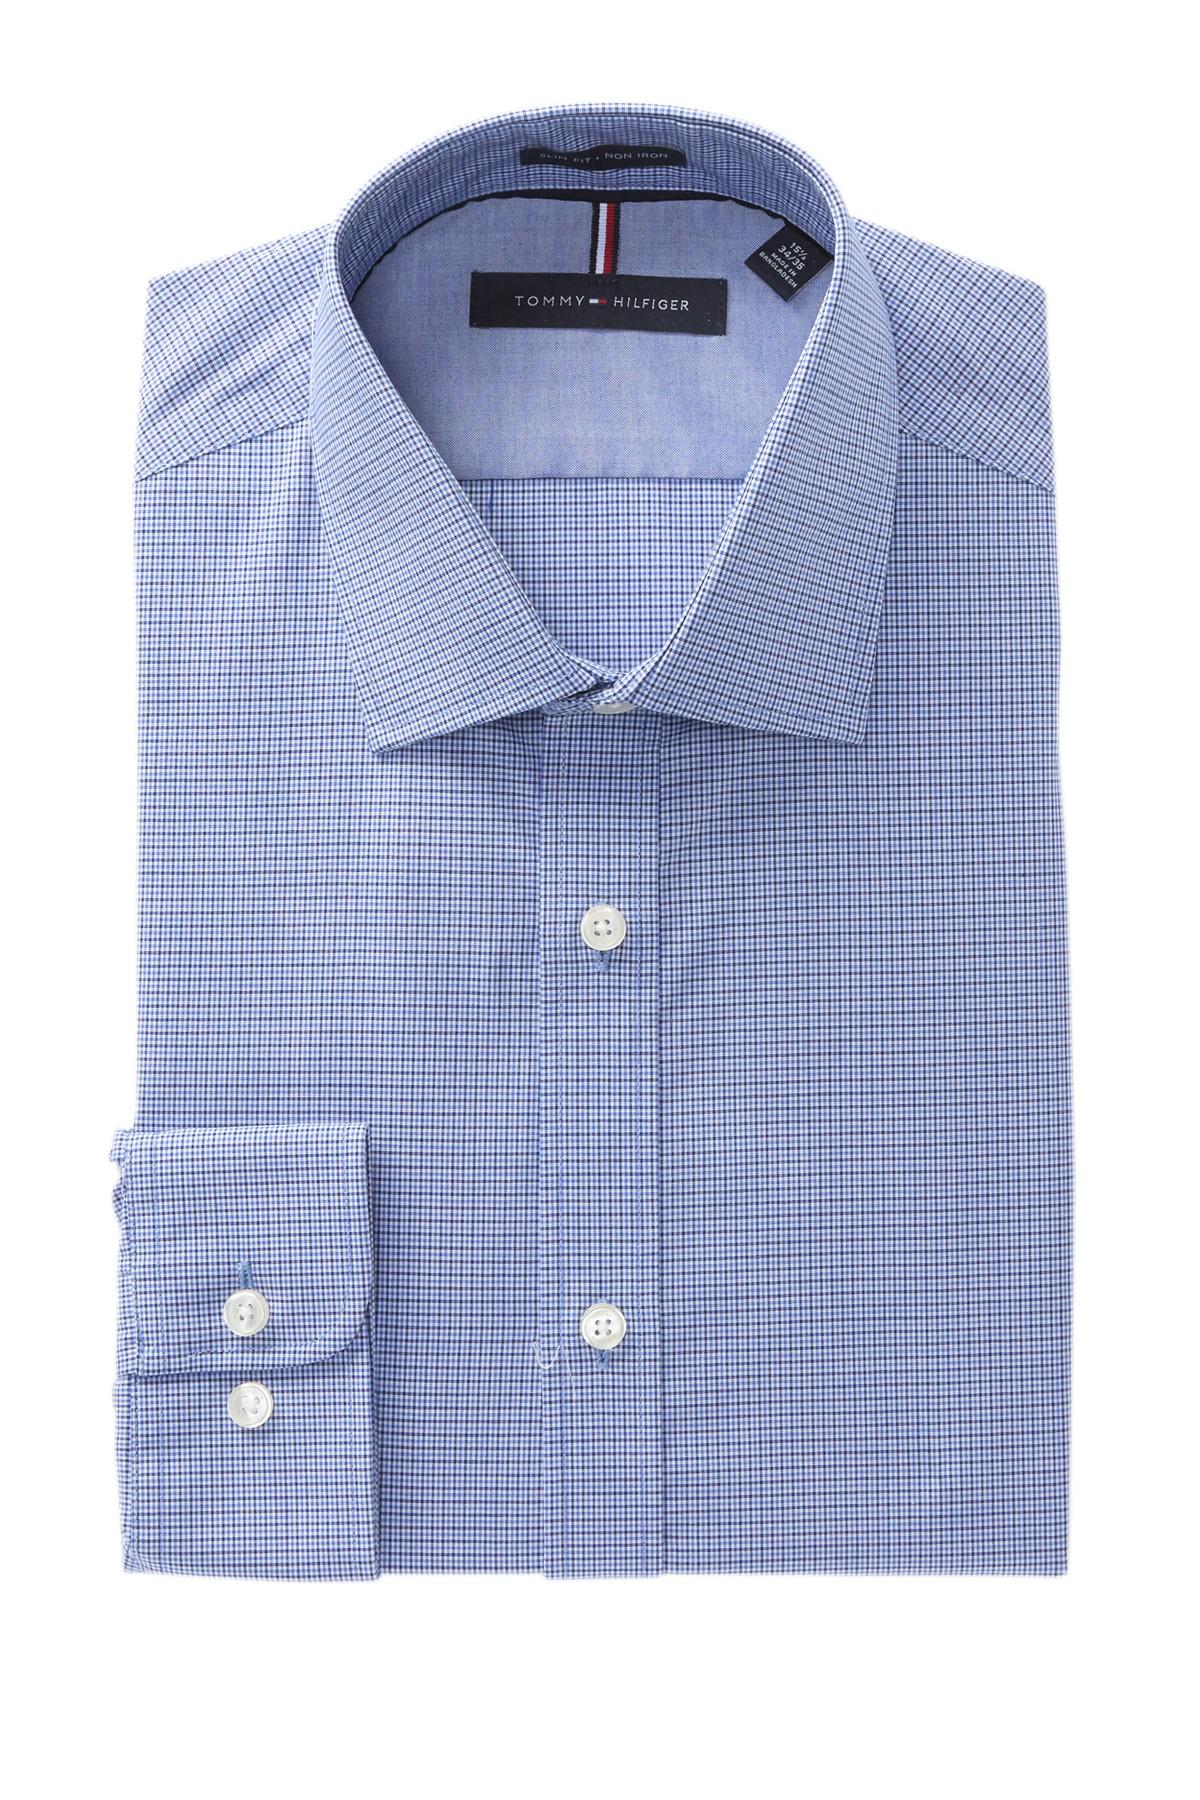 Tommy Hilfiger Cotton Check Slim Fit Dress Shirt in Cobalt (Blue) for ...